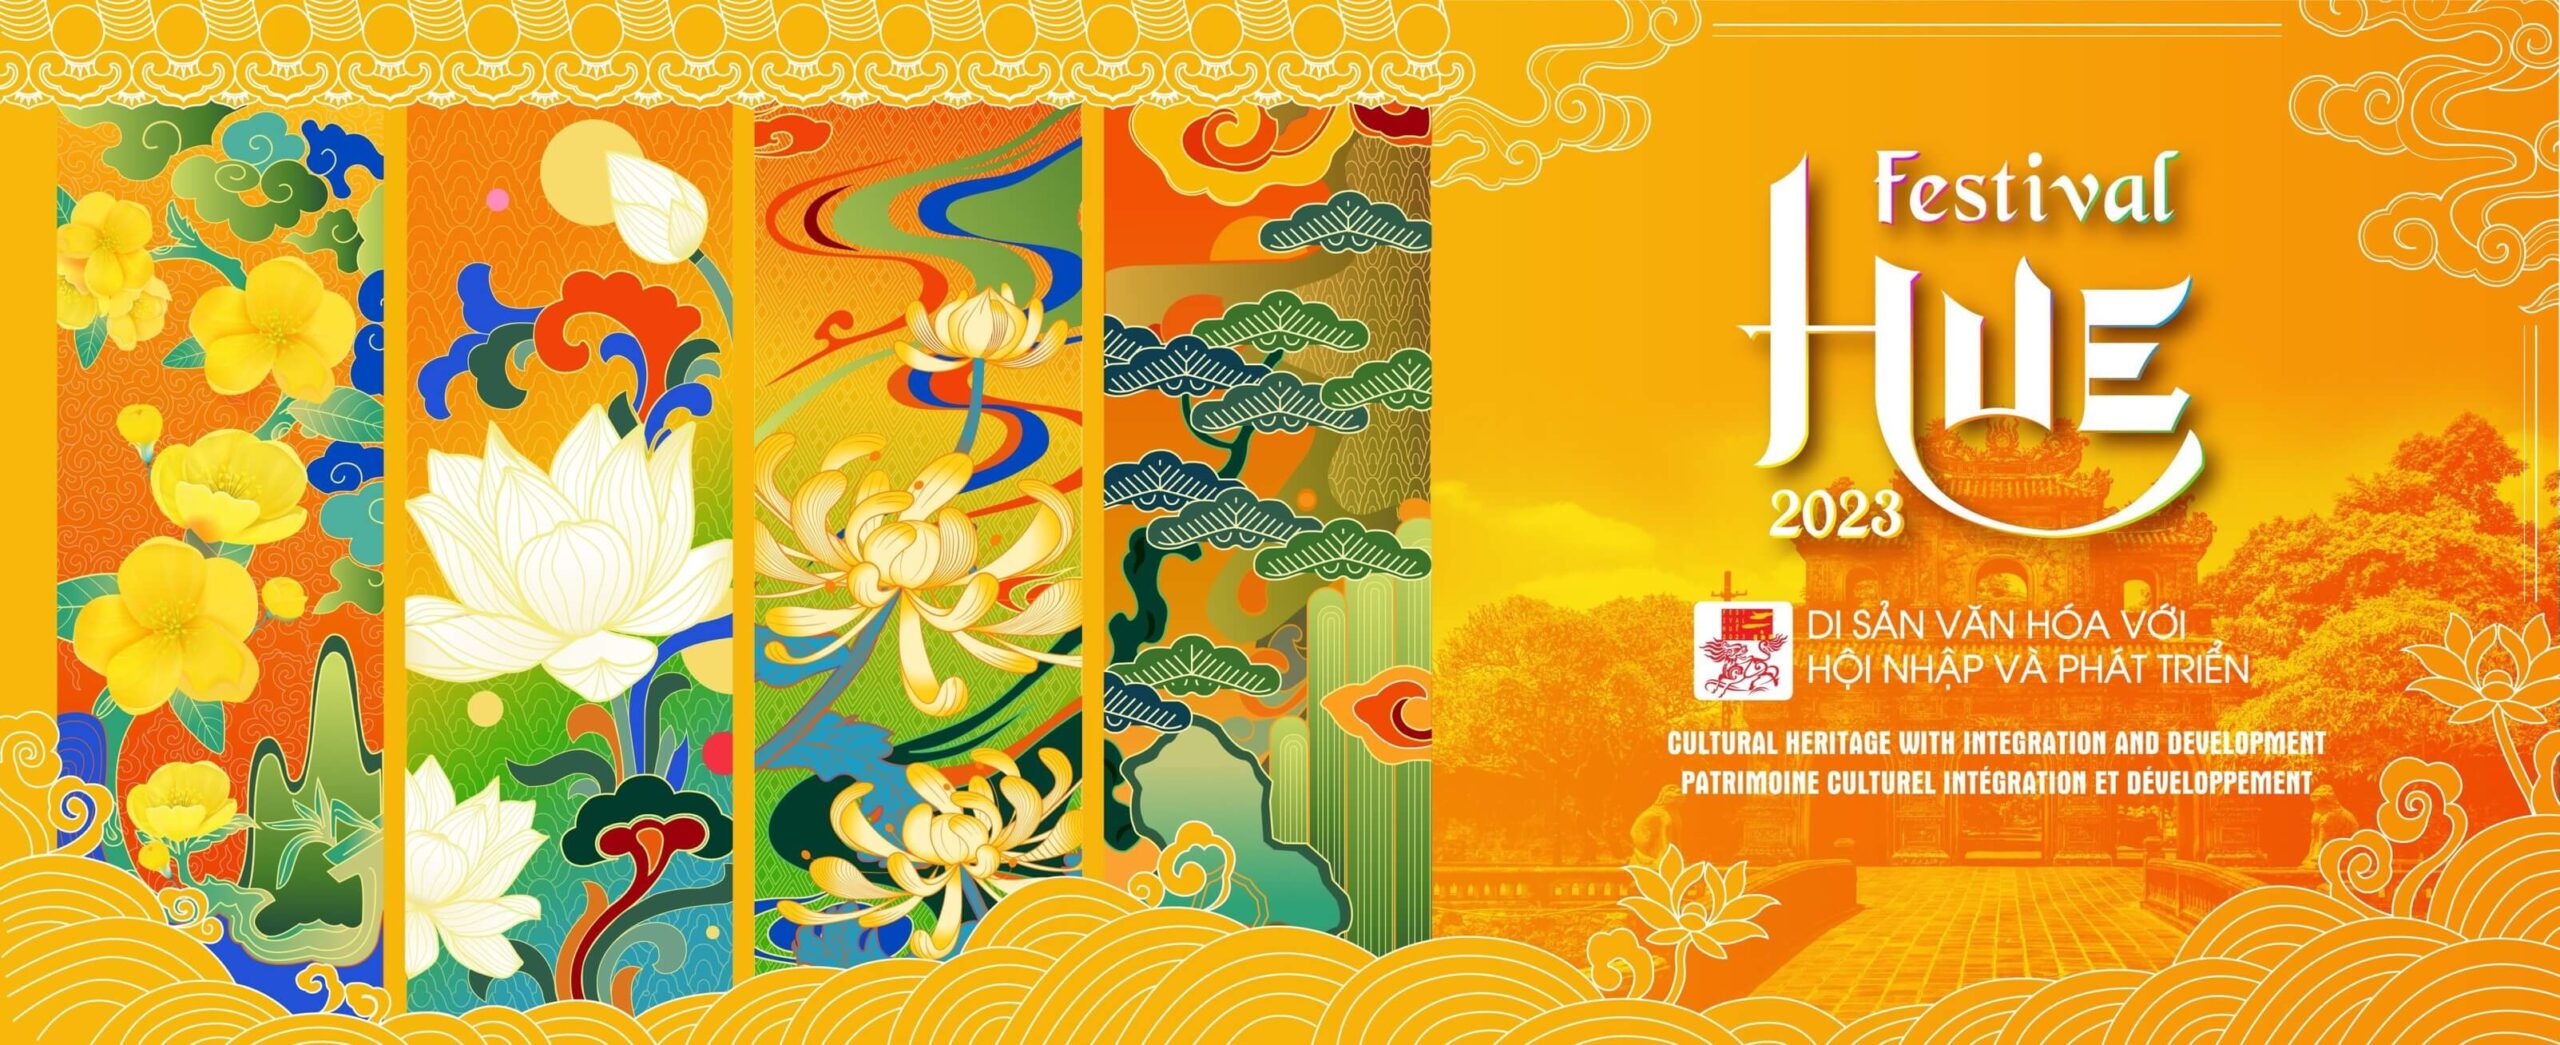 Festival Huế 2023 poster